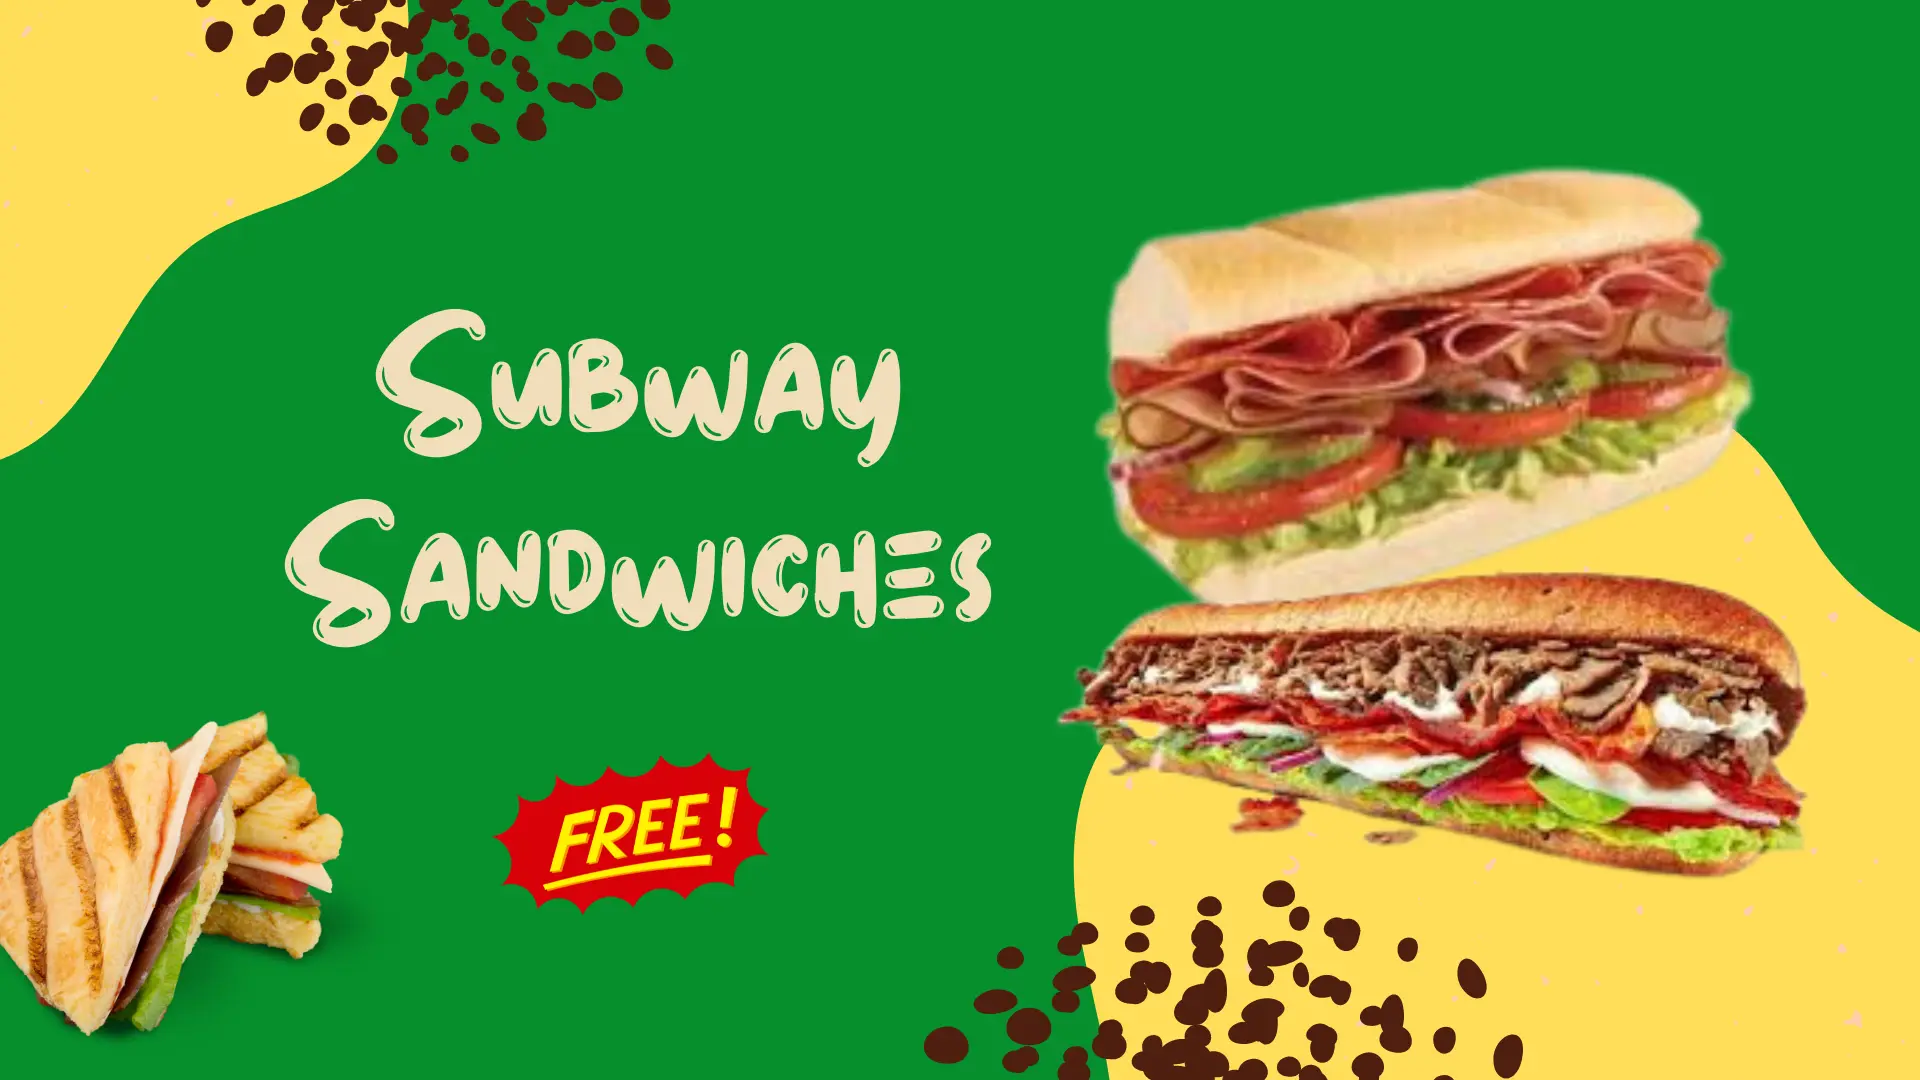 Free Subway Sandwiches